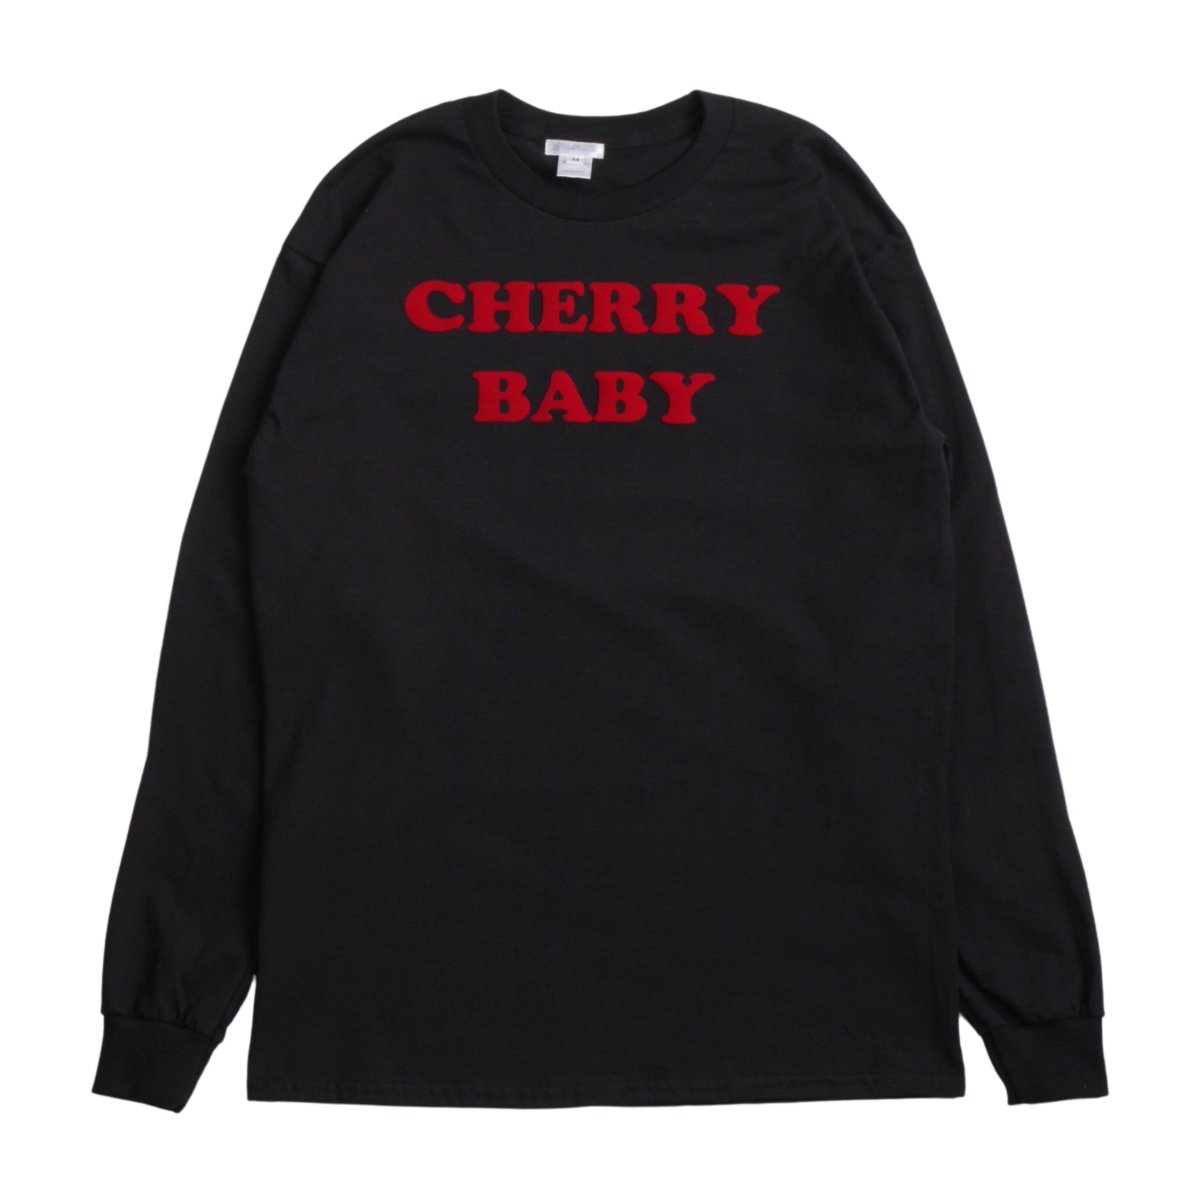 Cherry Baby Long Sleeve Tee【Black/Red】